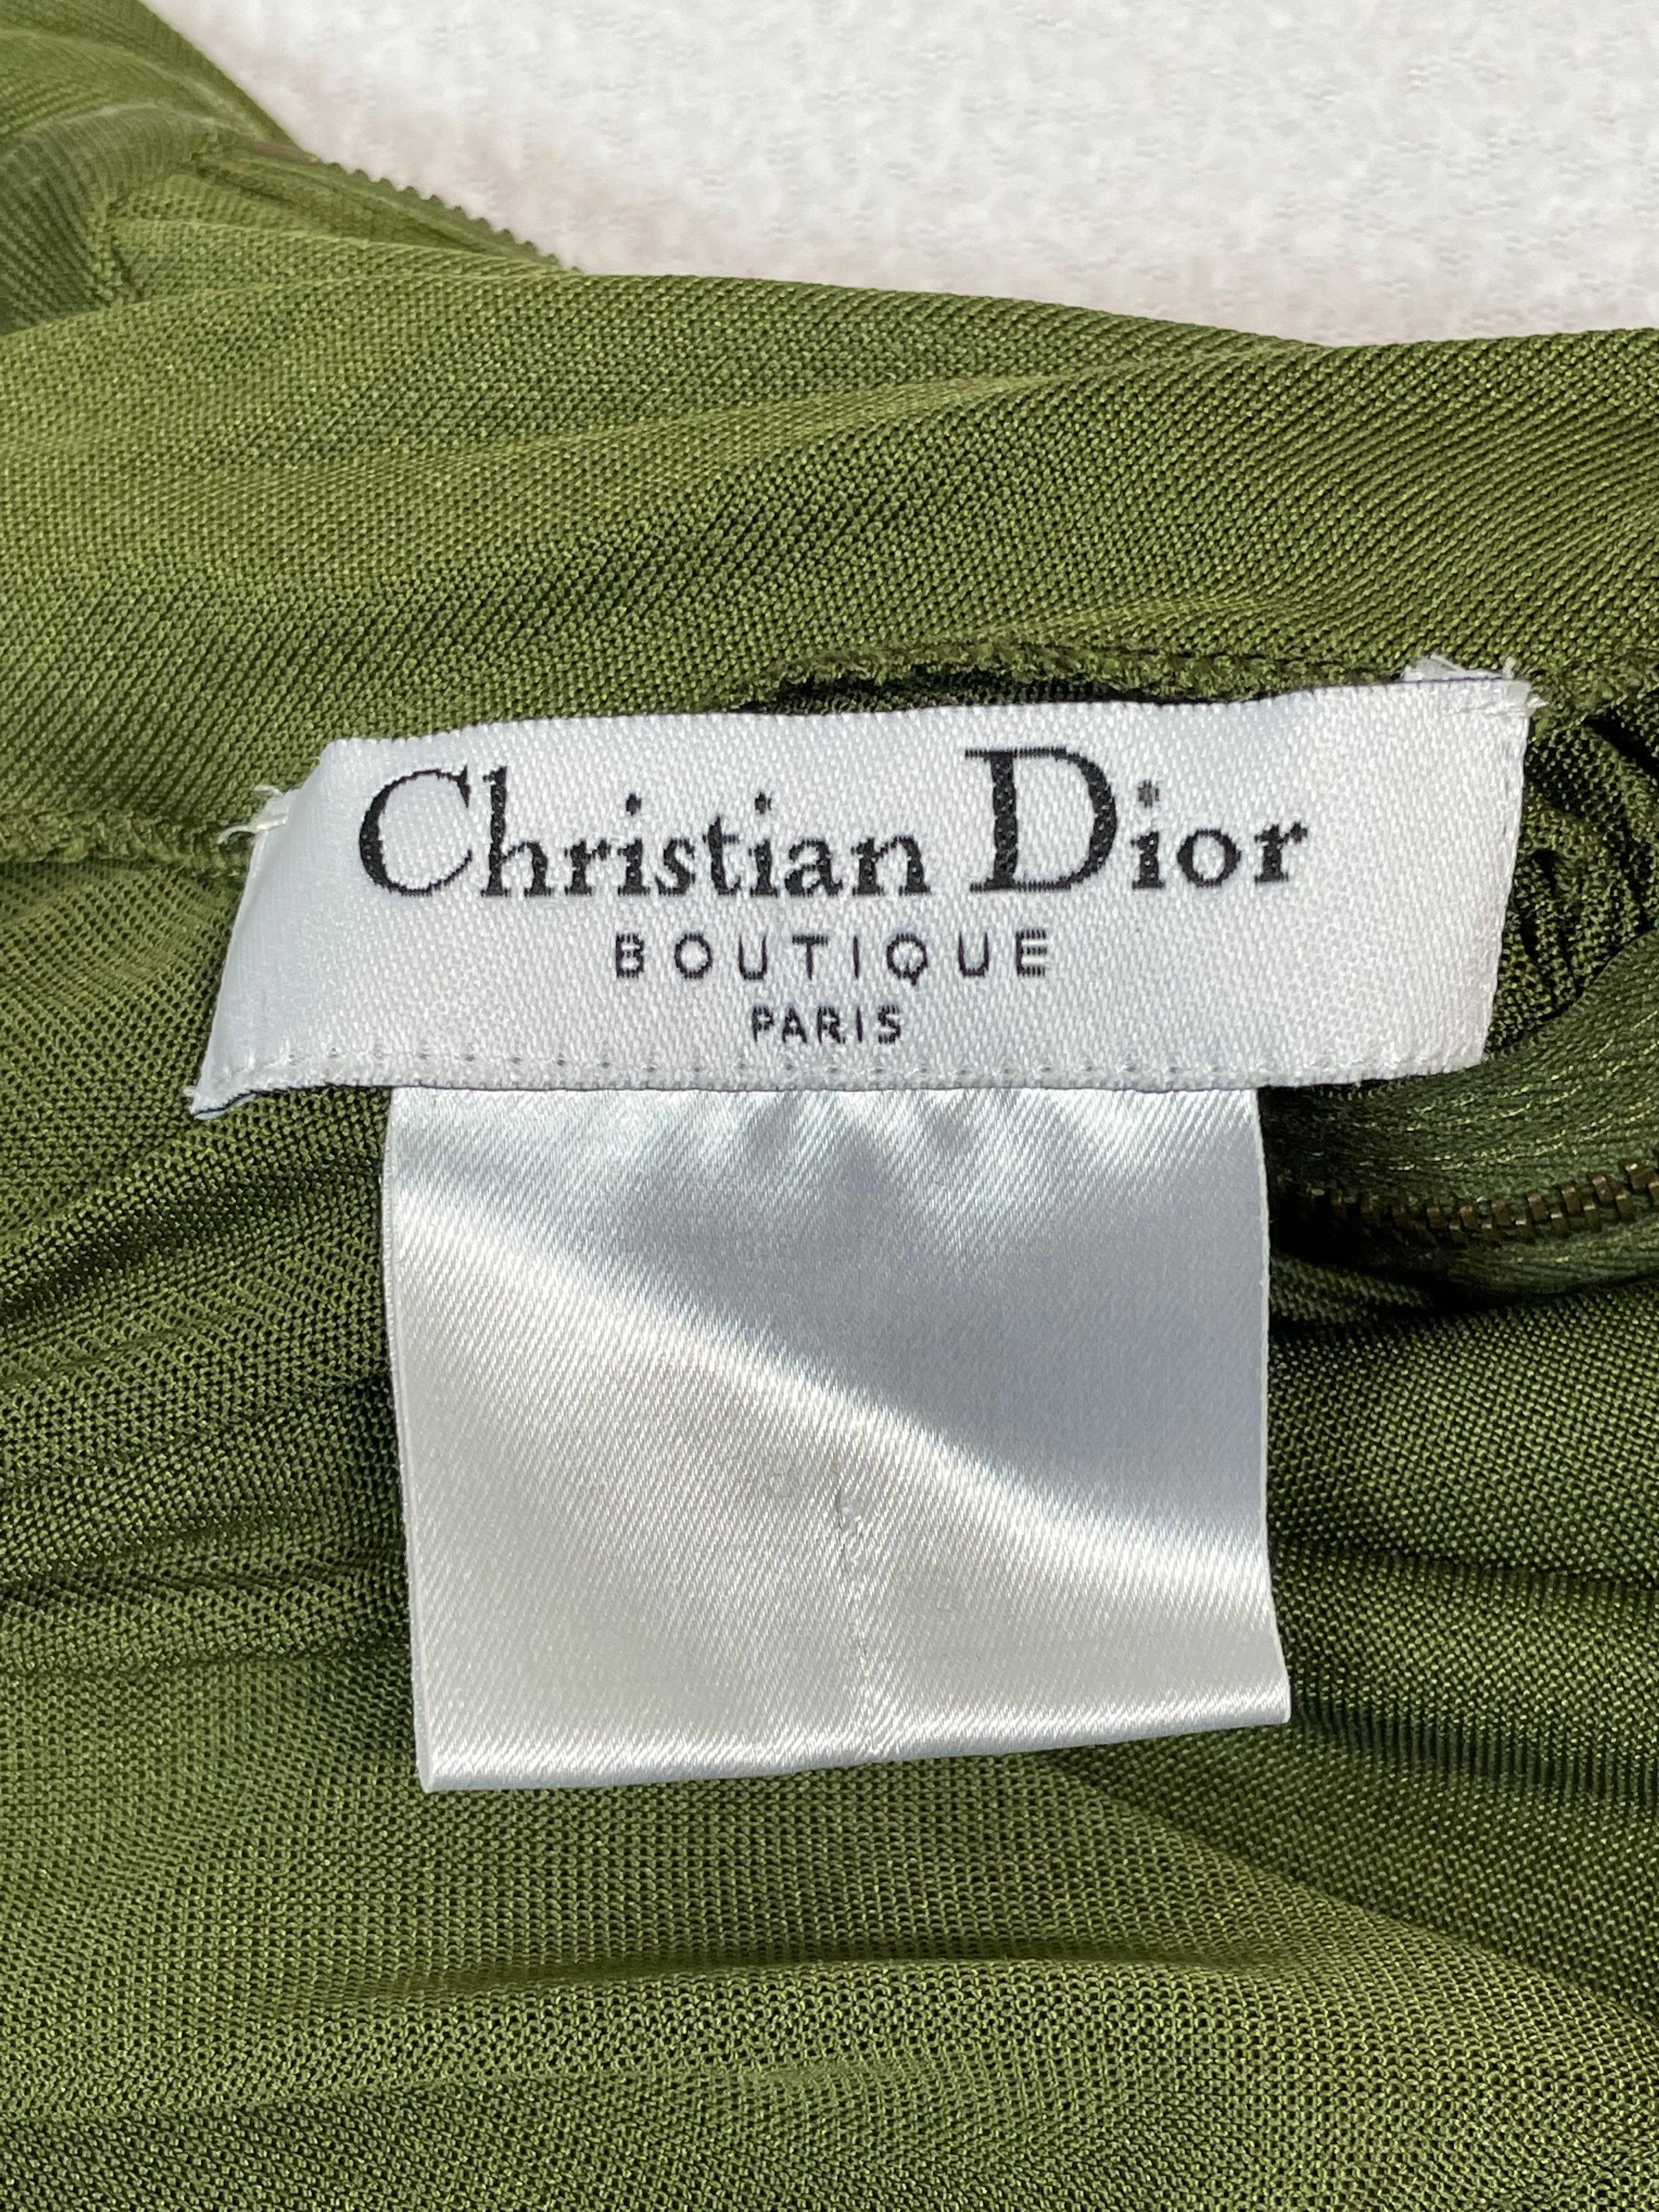 Women's S/S 2002 Christian Dior John Galliano Runway Green High Slit Maxi Dress